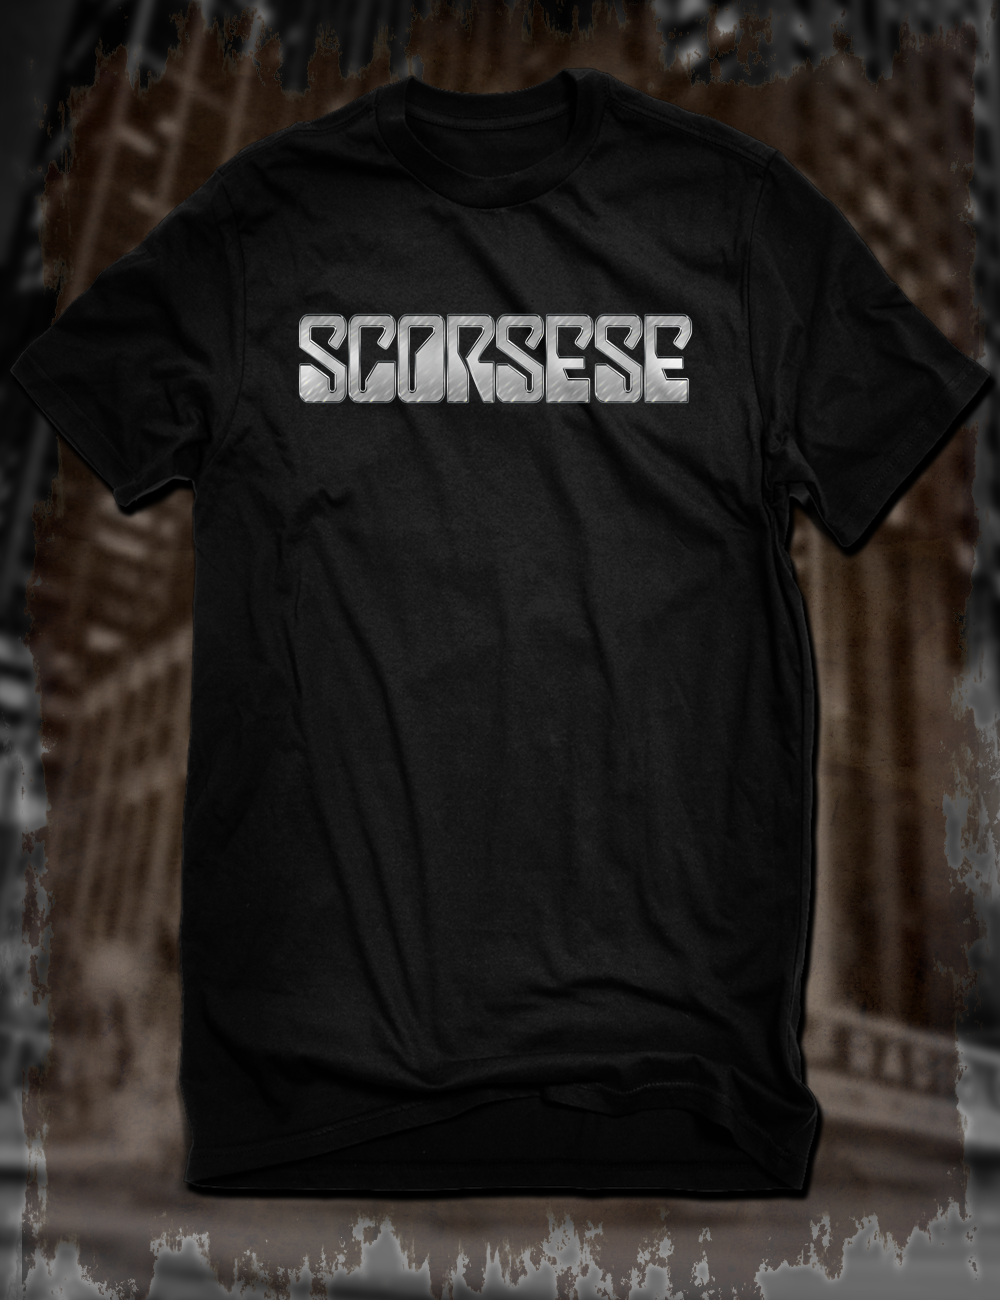 Martin Scorsese - The Scorpions T Shirt